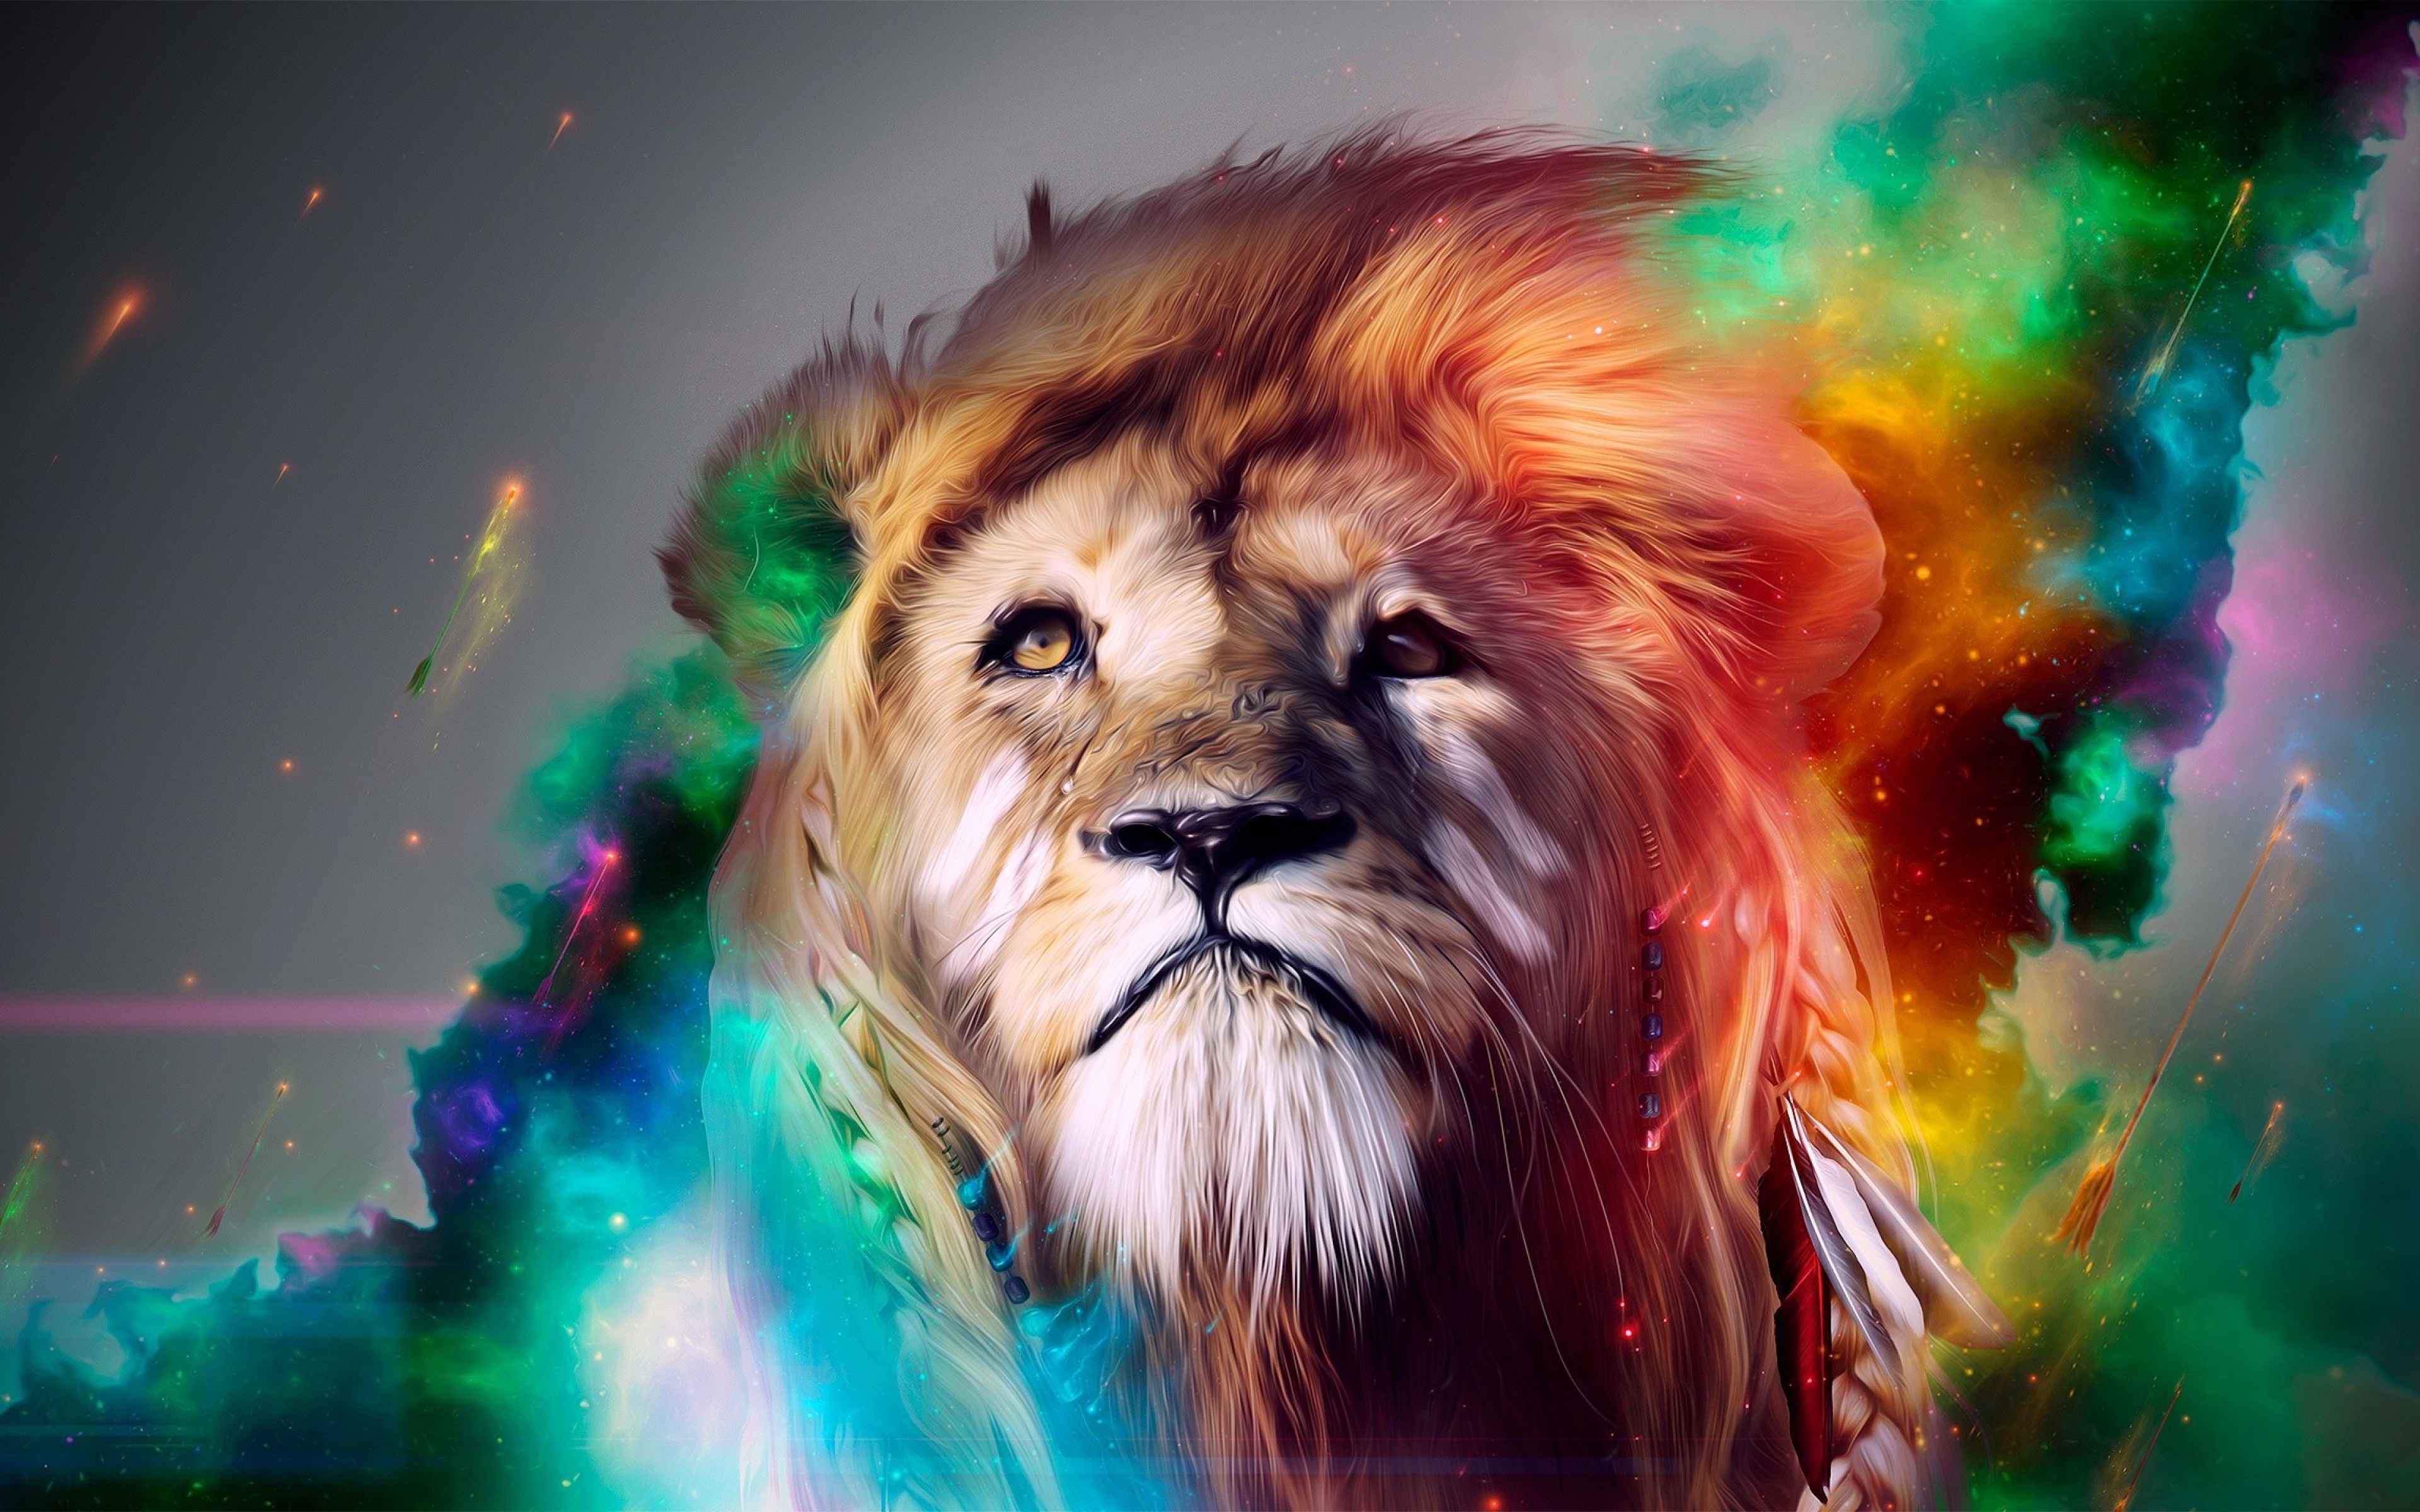 Lion animation wallpaper hd | imageinarts.com